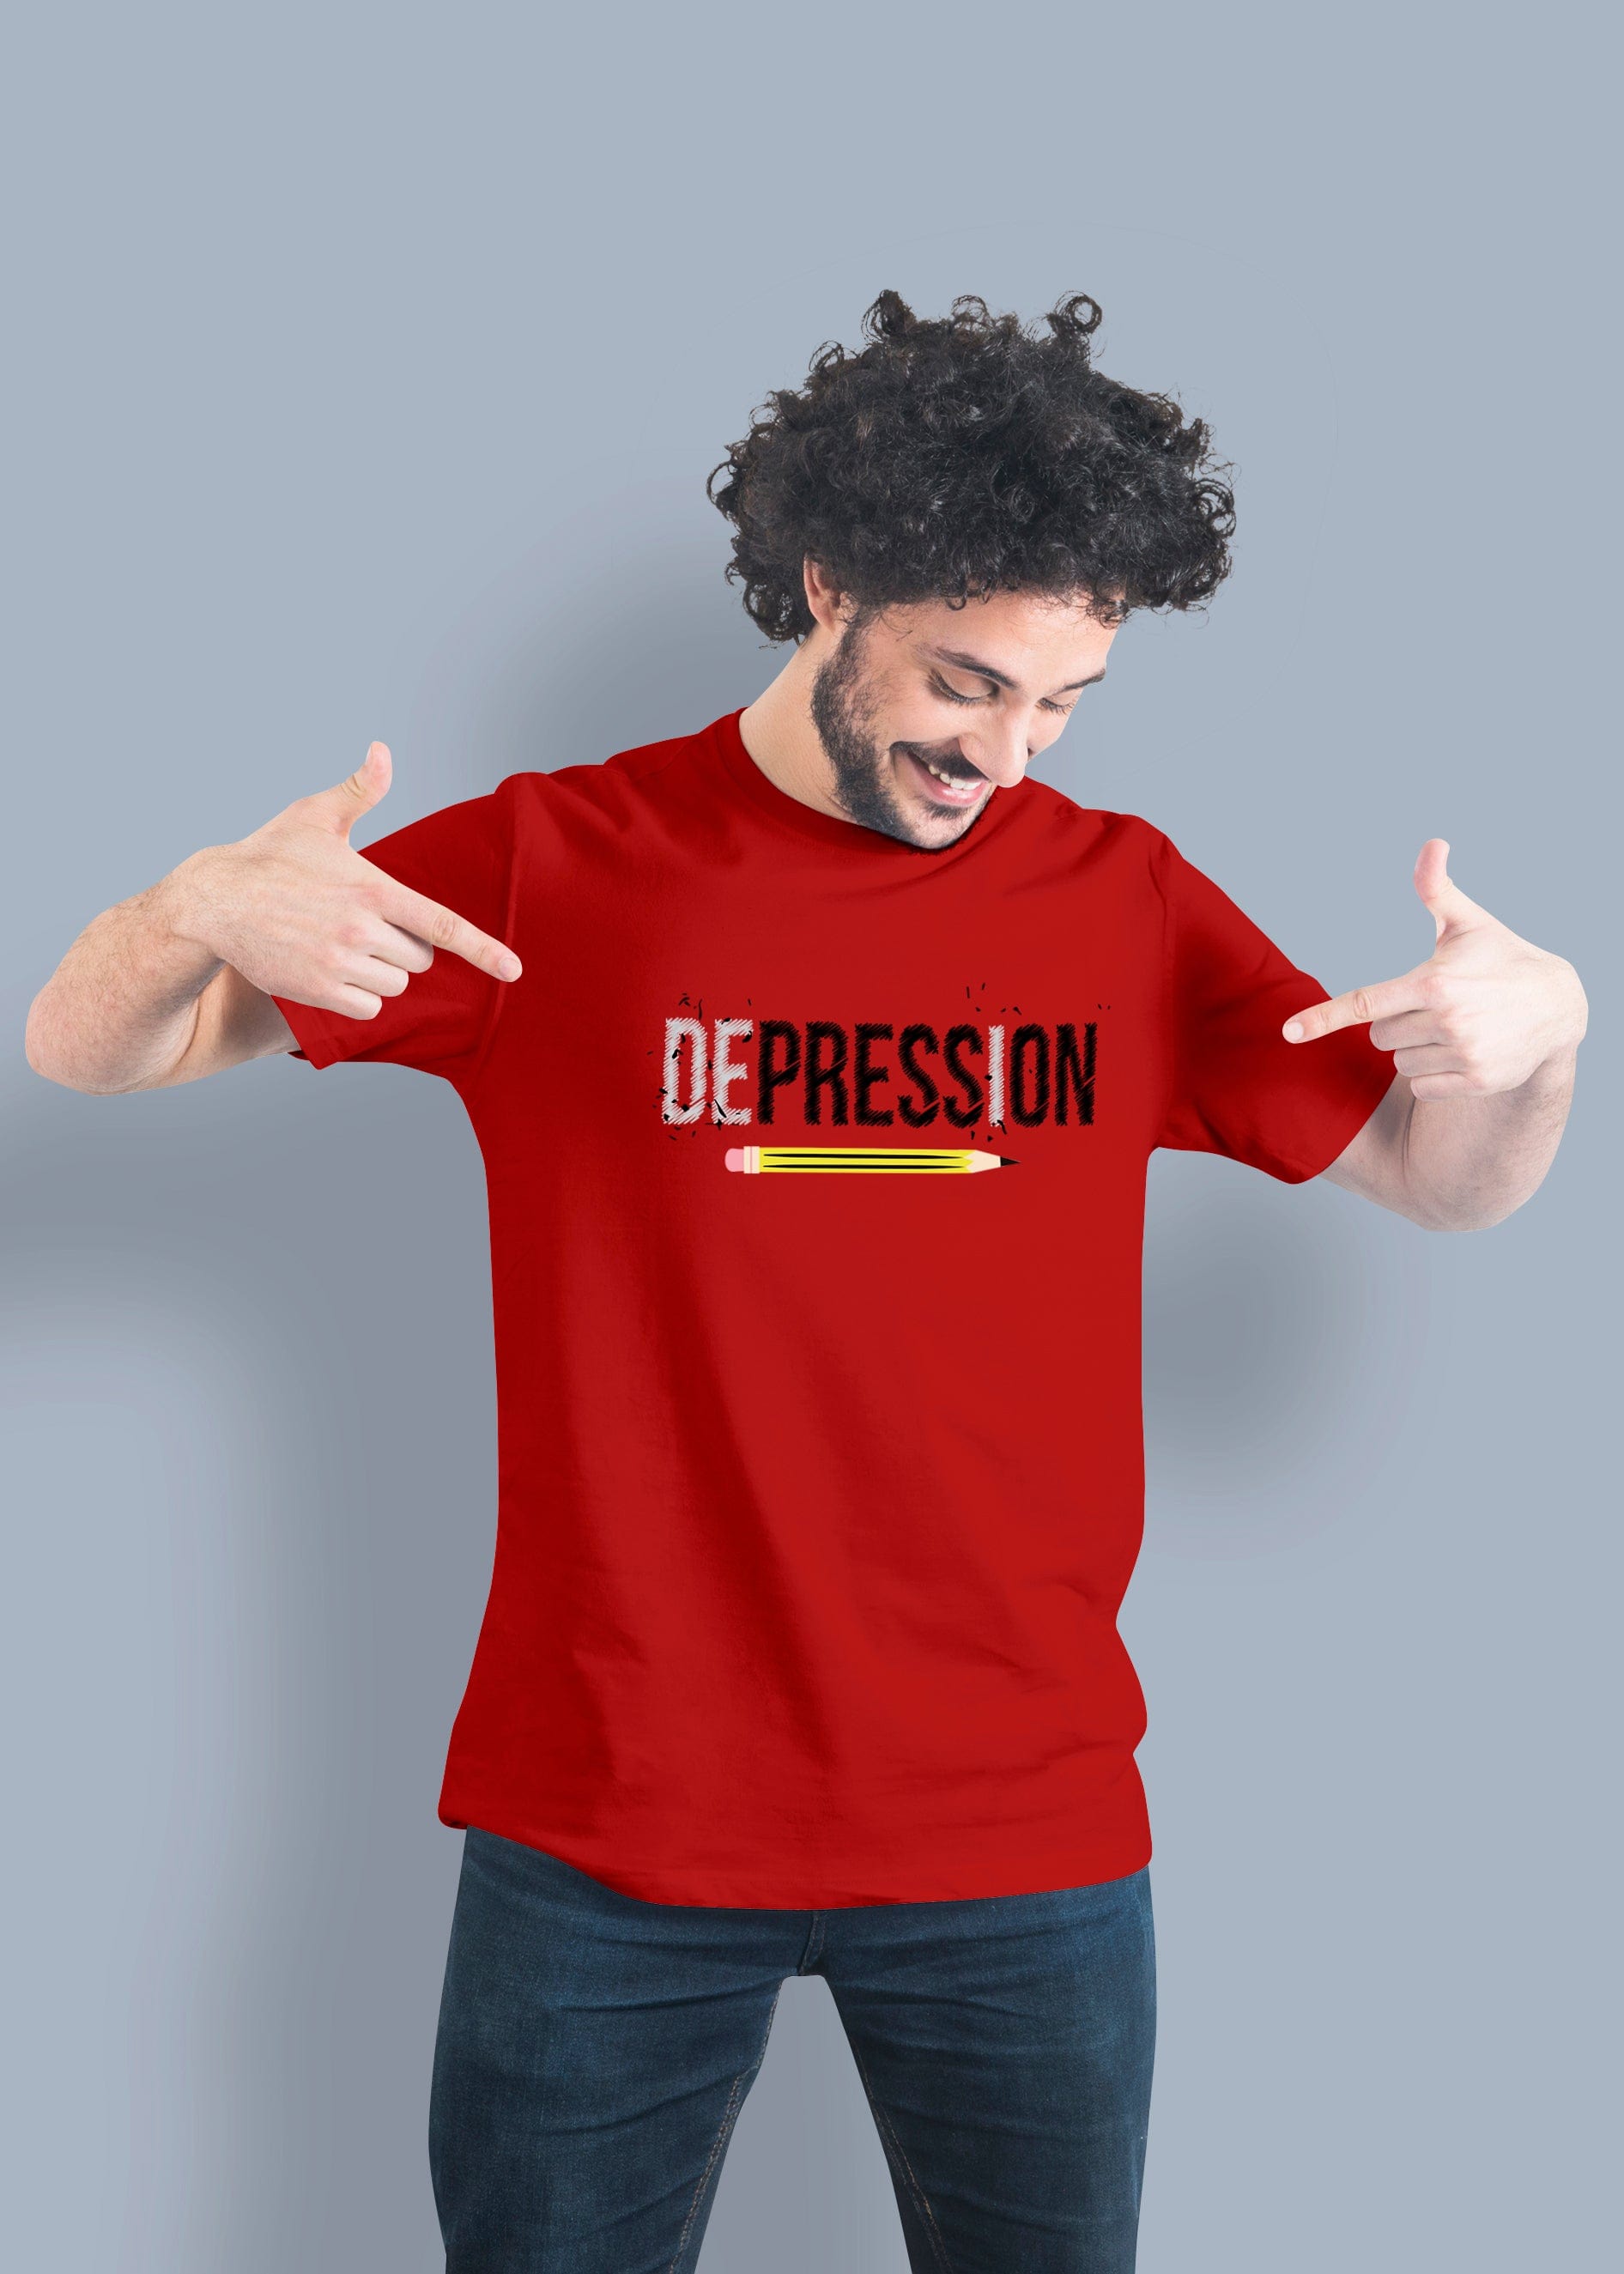 Depression Printed Half Sleeve Premium Cotton T-shirt For Men